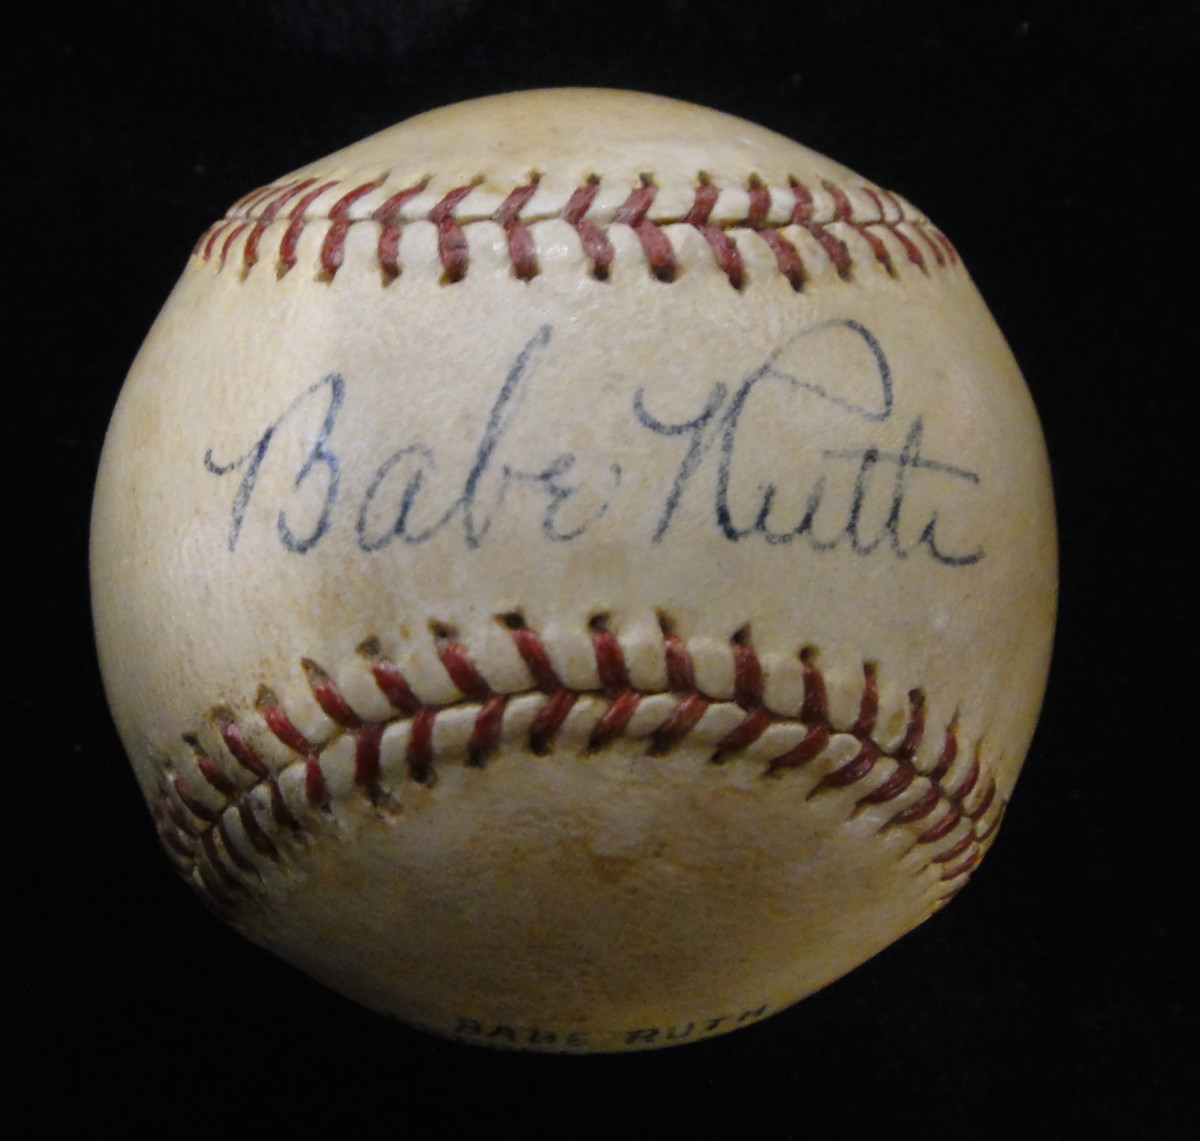 11. Ruth forged baseball